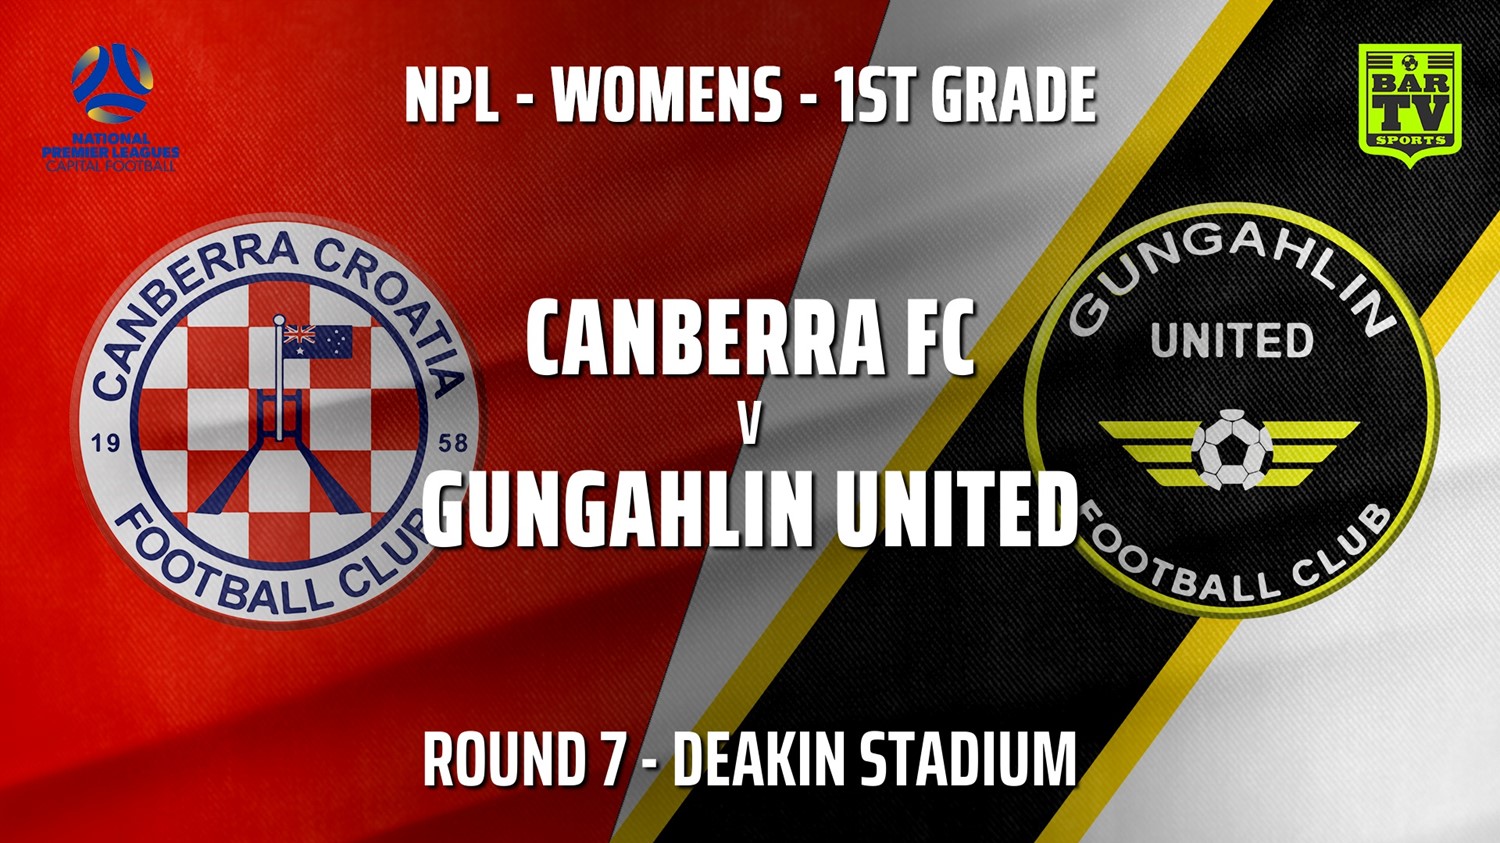 210523-NPLW - Capital Round 7 - Canberra FC (women) v Gungahlin United FC (women) Minigame Slate Image